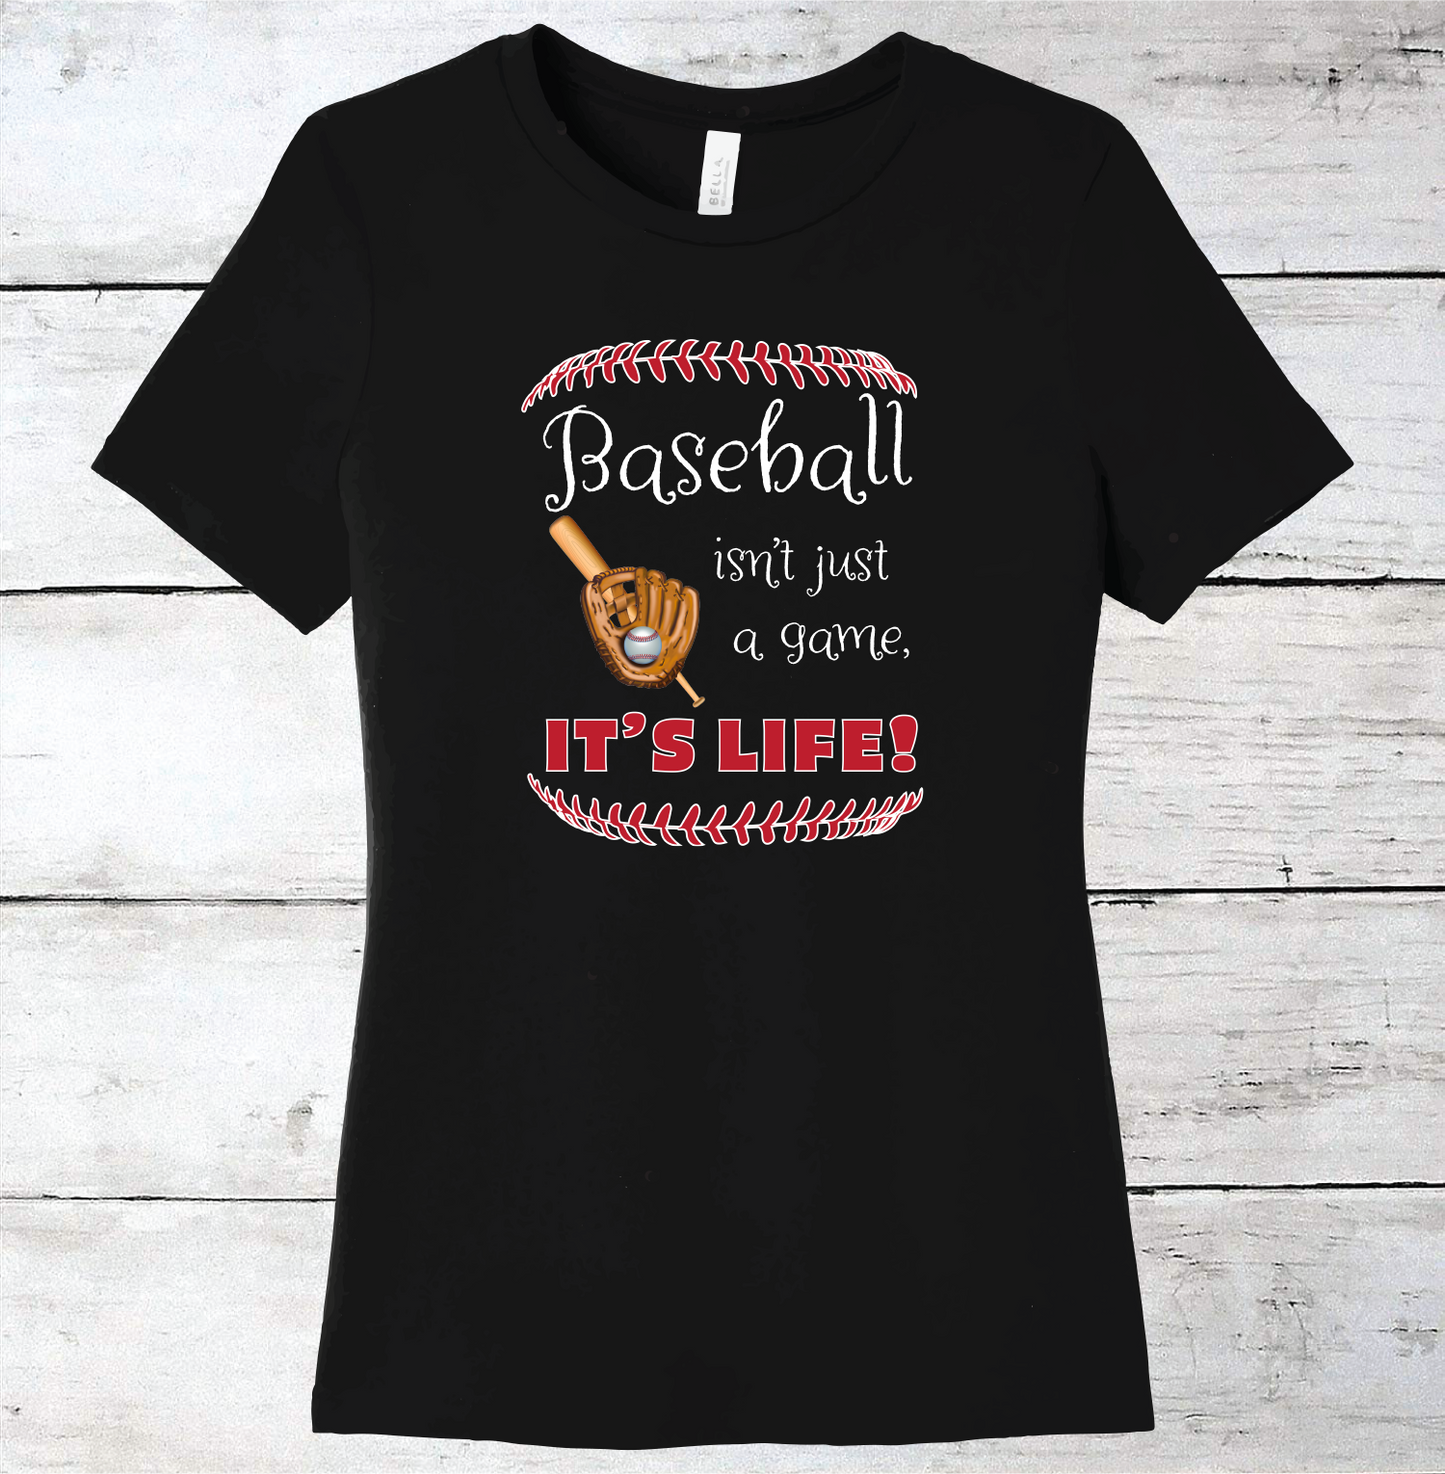 Baseball Isn't Just a Game, It's Life T-Shirt